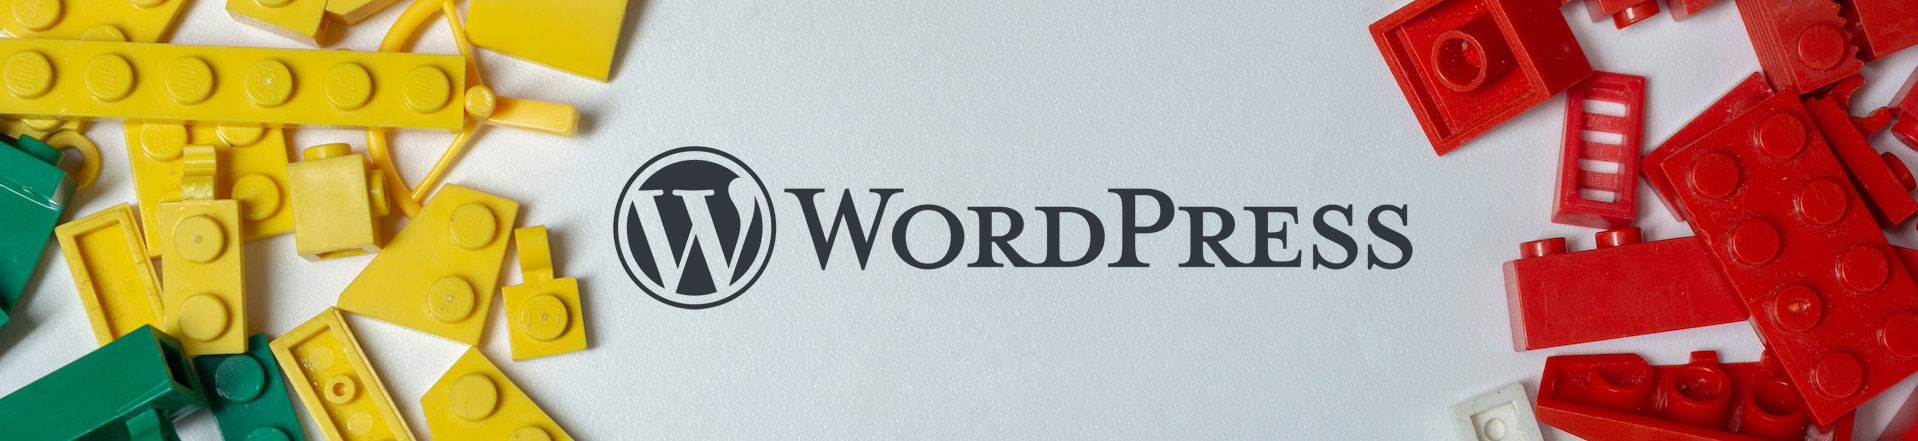 WordPress has changed